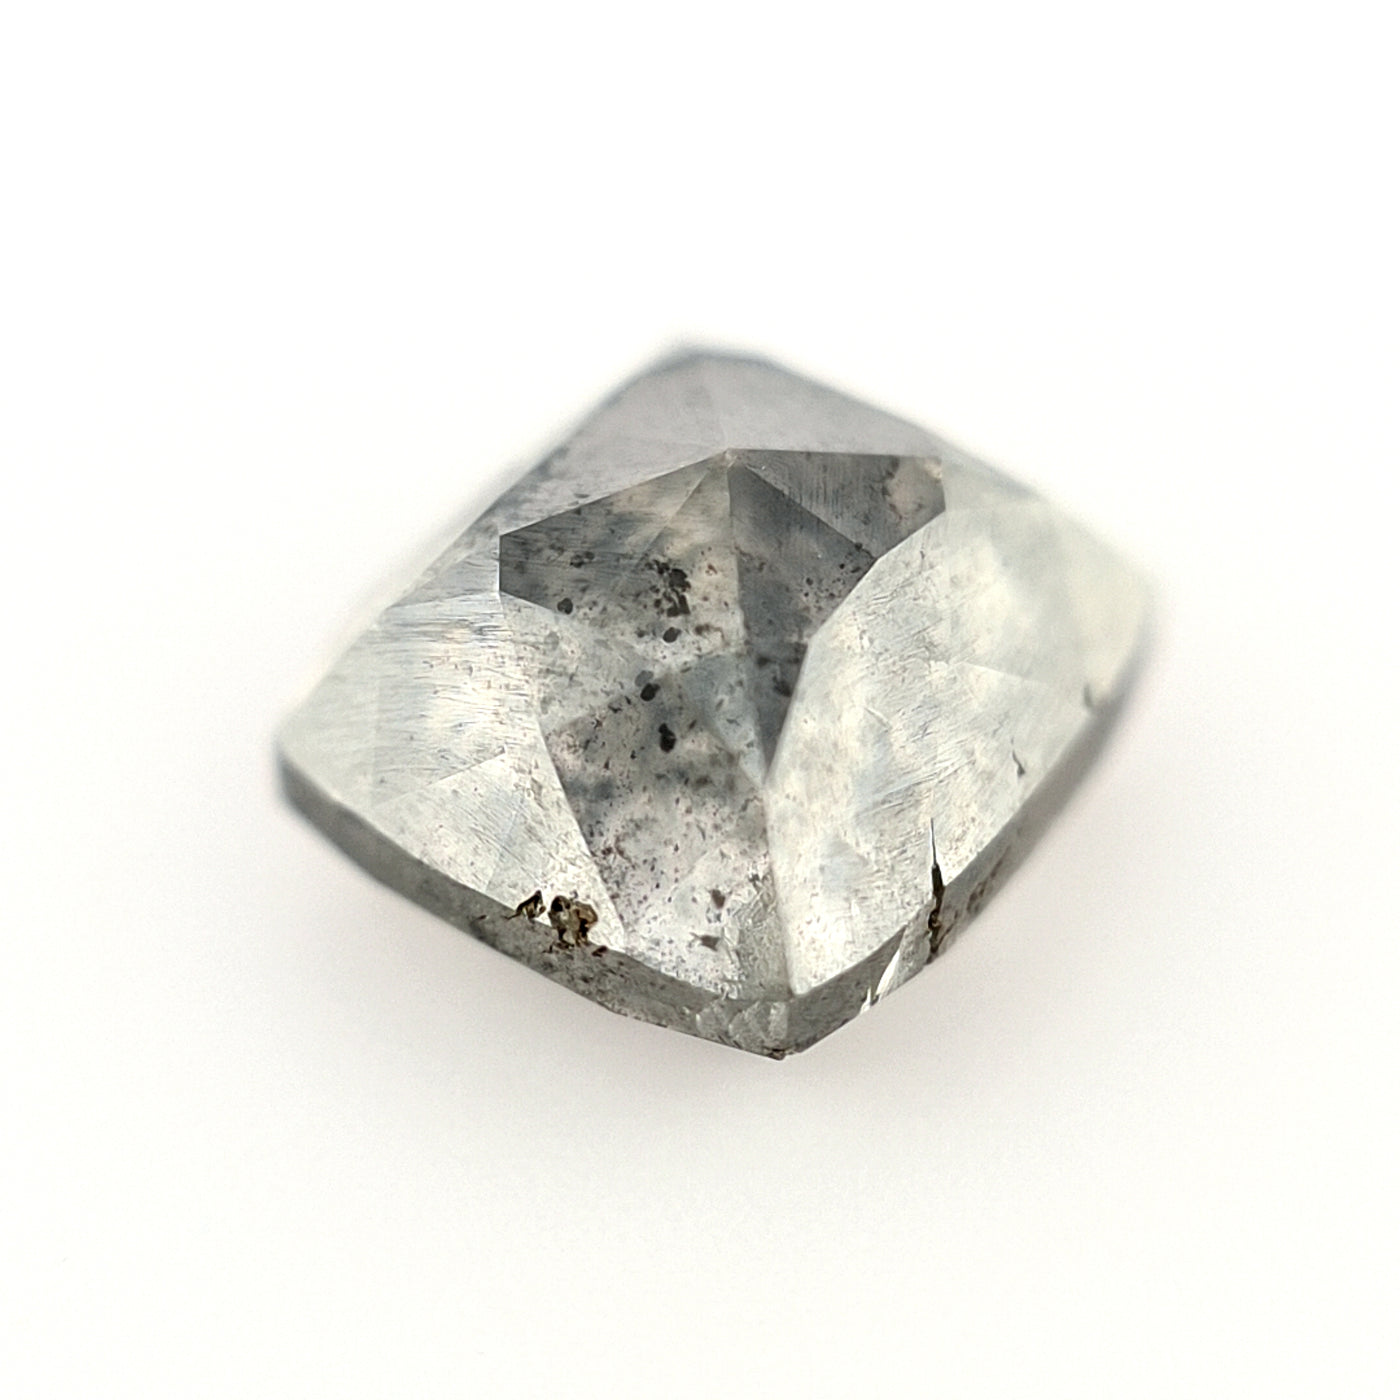 2.08ct Australian Salt and Pepper Diamond - Cushion cut